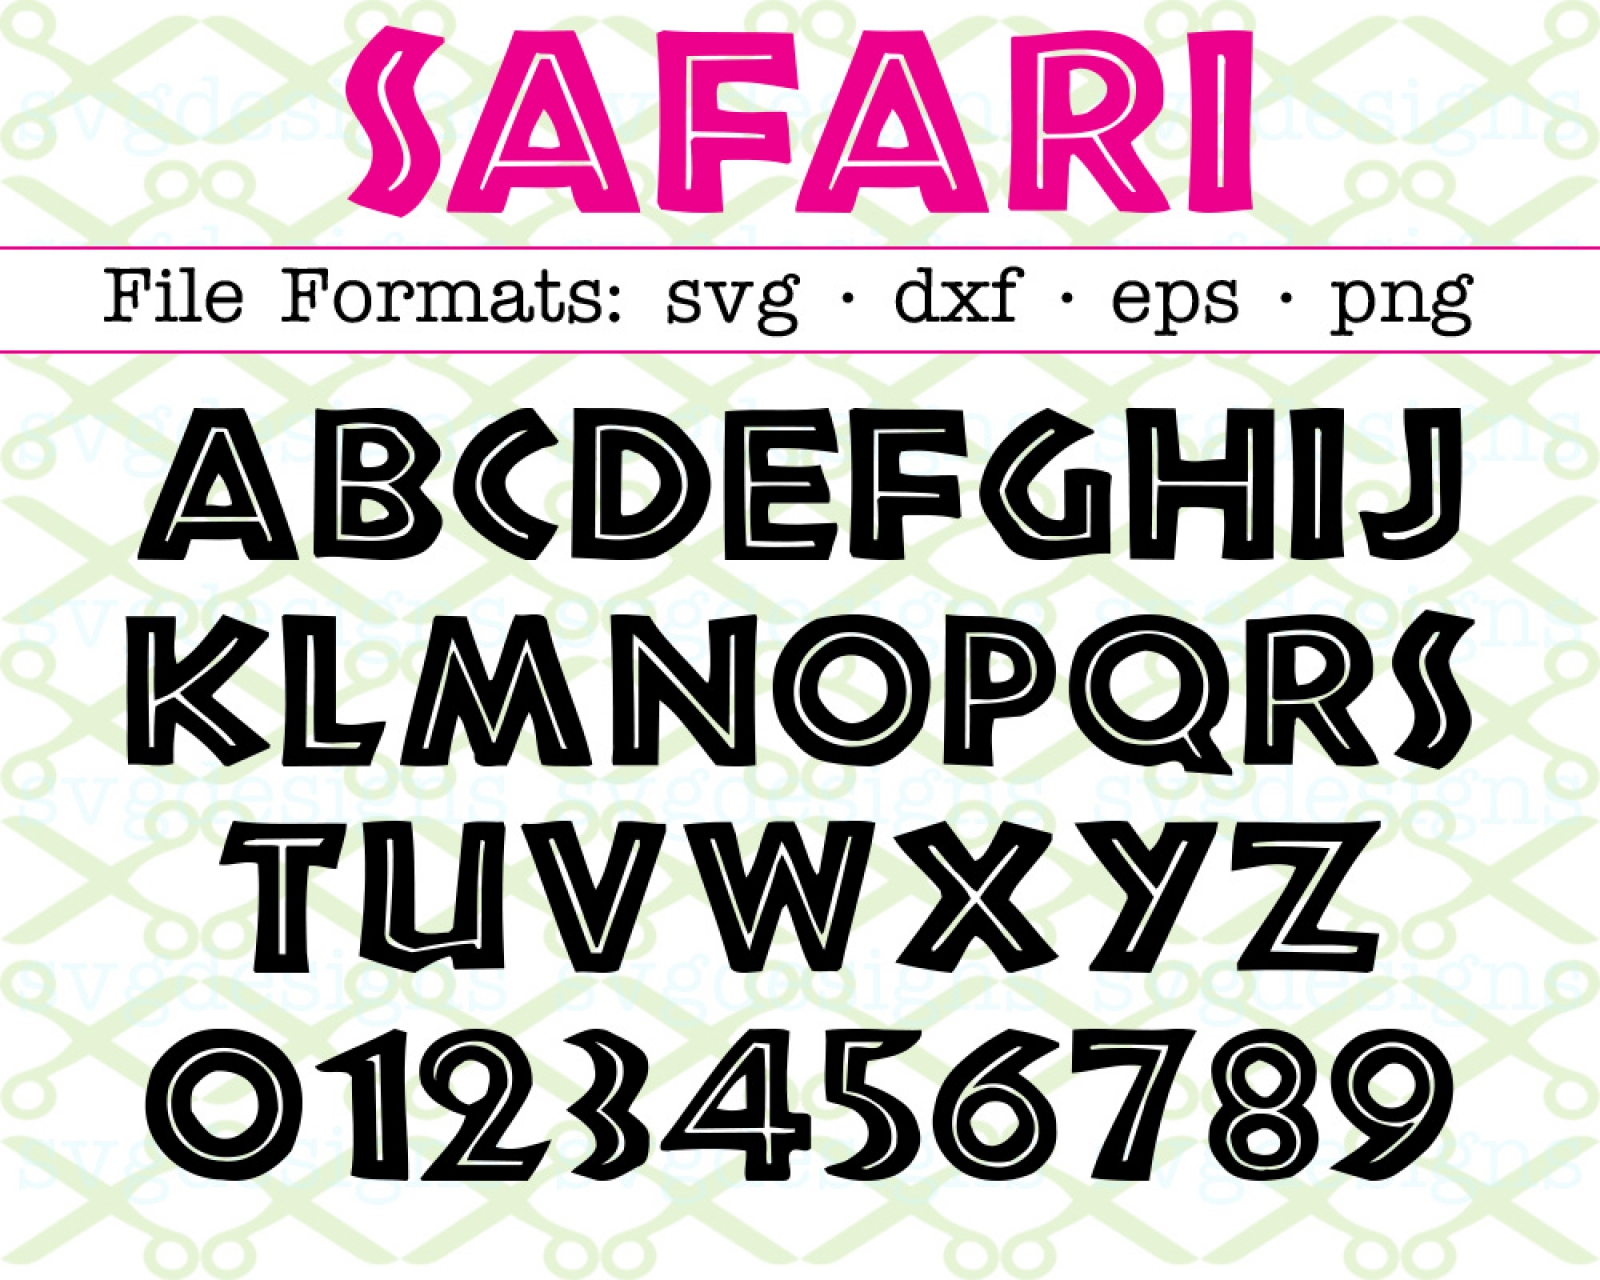 safari theme font style